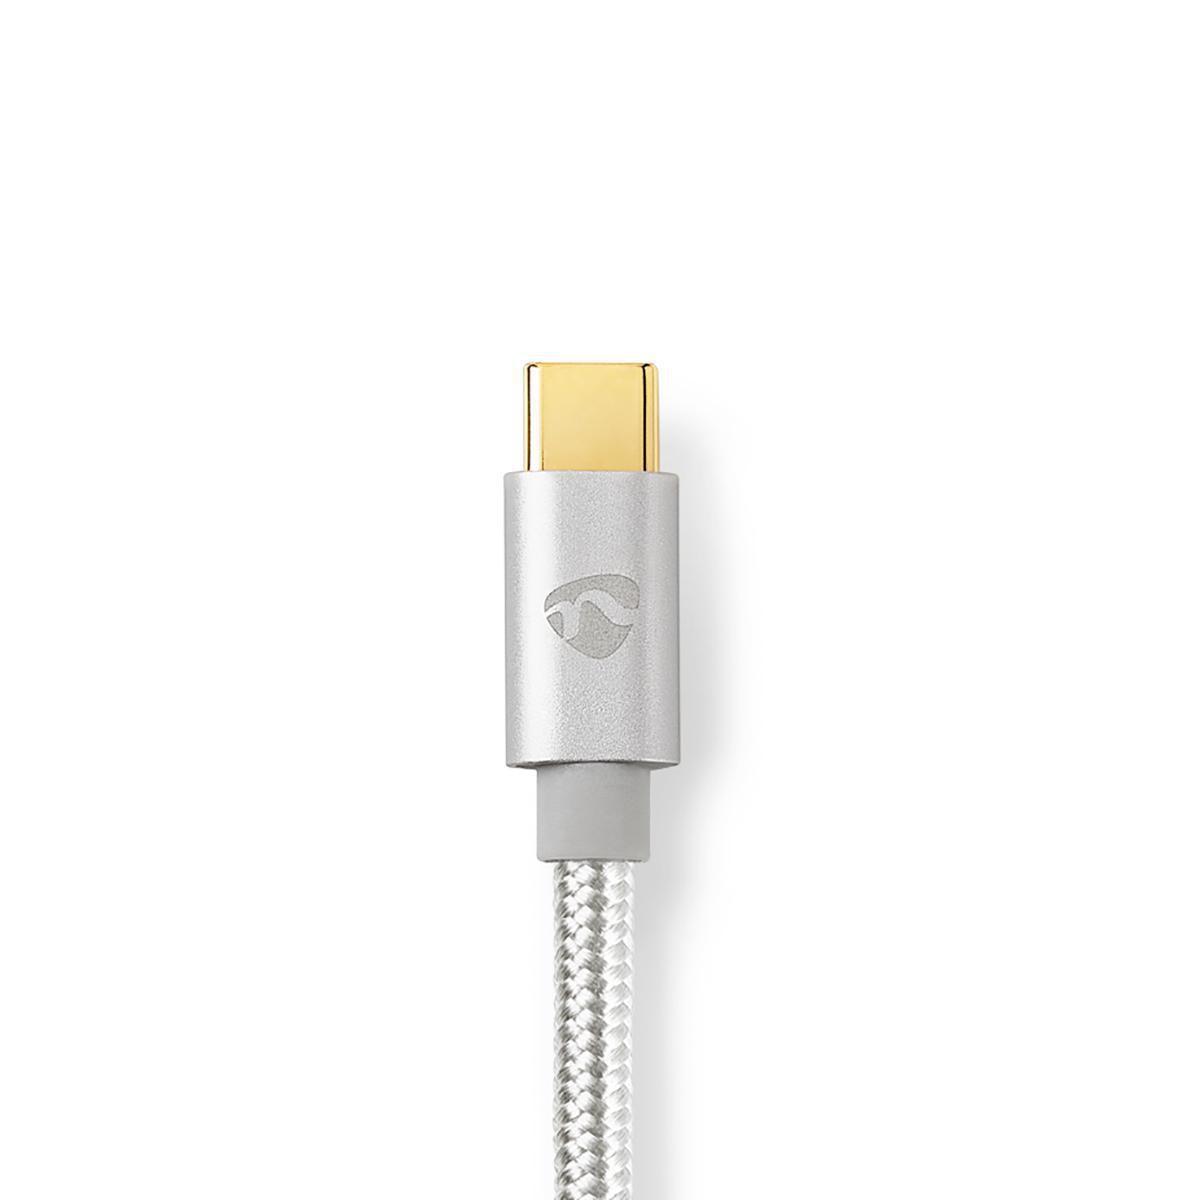 Nedis  Cavo Lightning | USB 2.0 | Apple Lightning, 8-pin | USB-C™ Maschio | 480 Mbps | Placcato oro | 2,00 m | Rotondo | Intrecciato / Nylon | Alluminio | Scatola con finestra coperta 